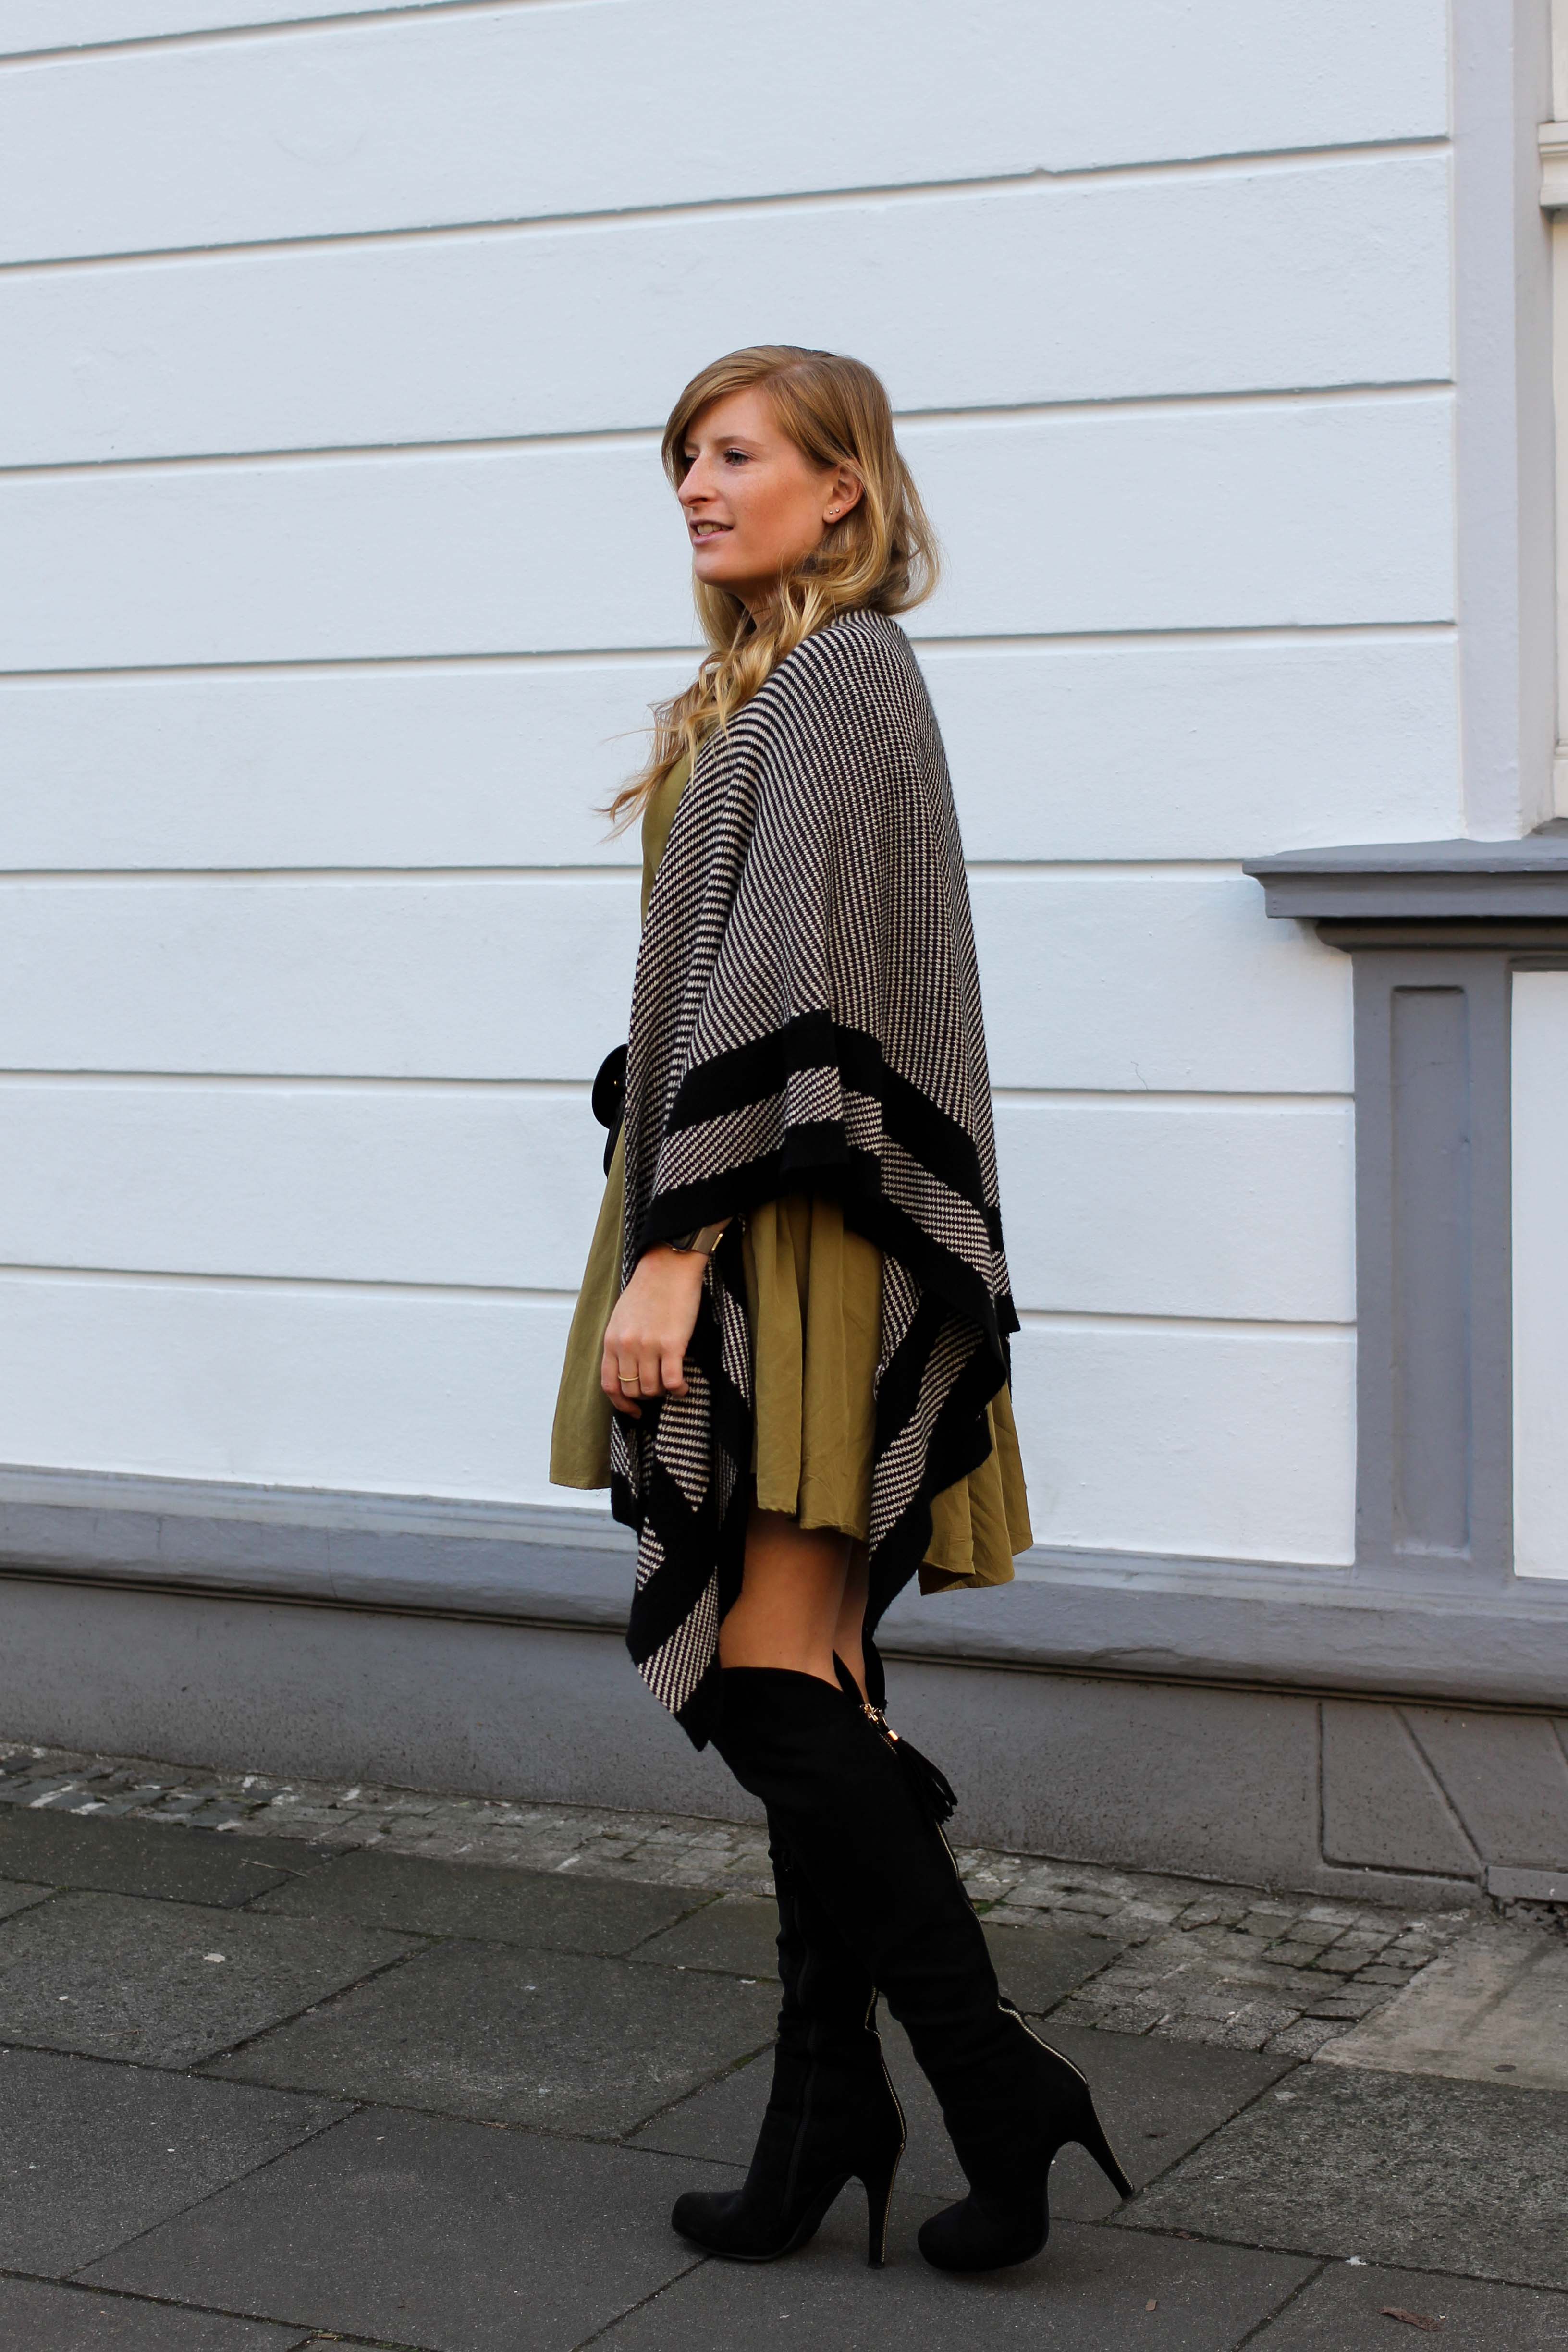 Overknees Gürteltasche Prada Poncho Second-Hand Kleidung kombinieren Streetstyle Outfit Bonn Zara Kleid grün Frühling 2019 3